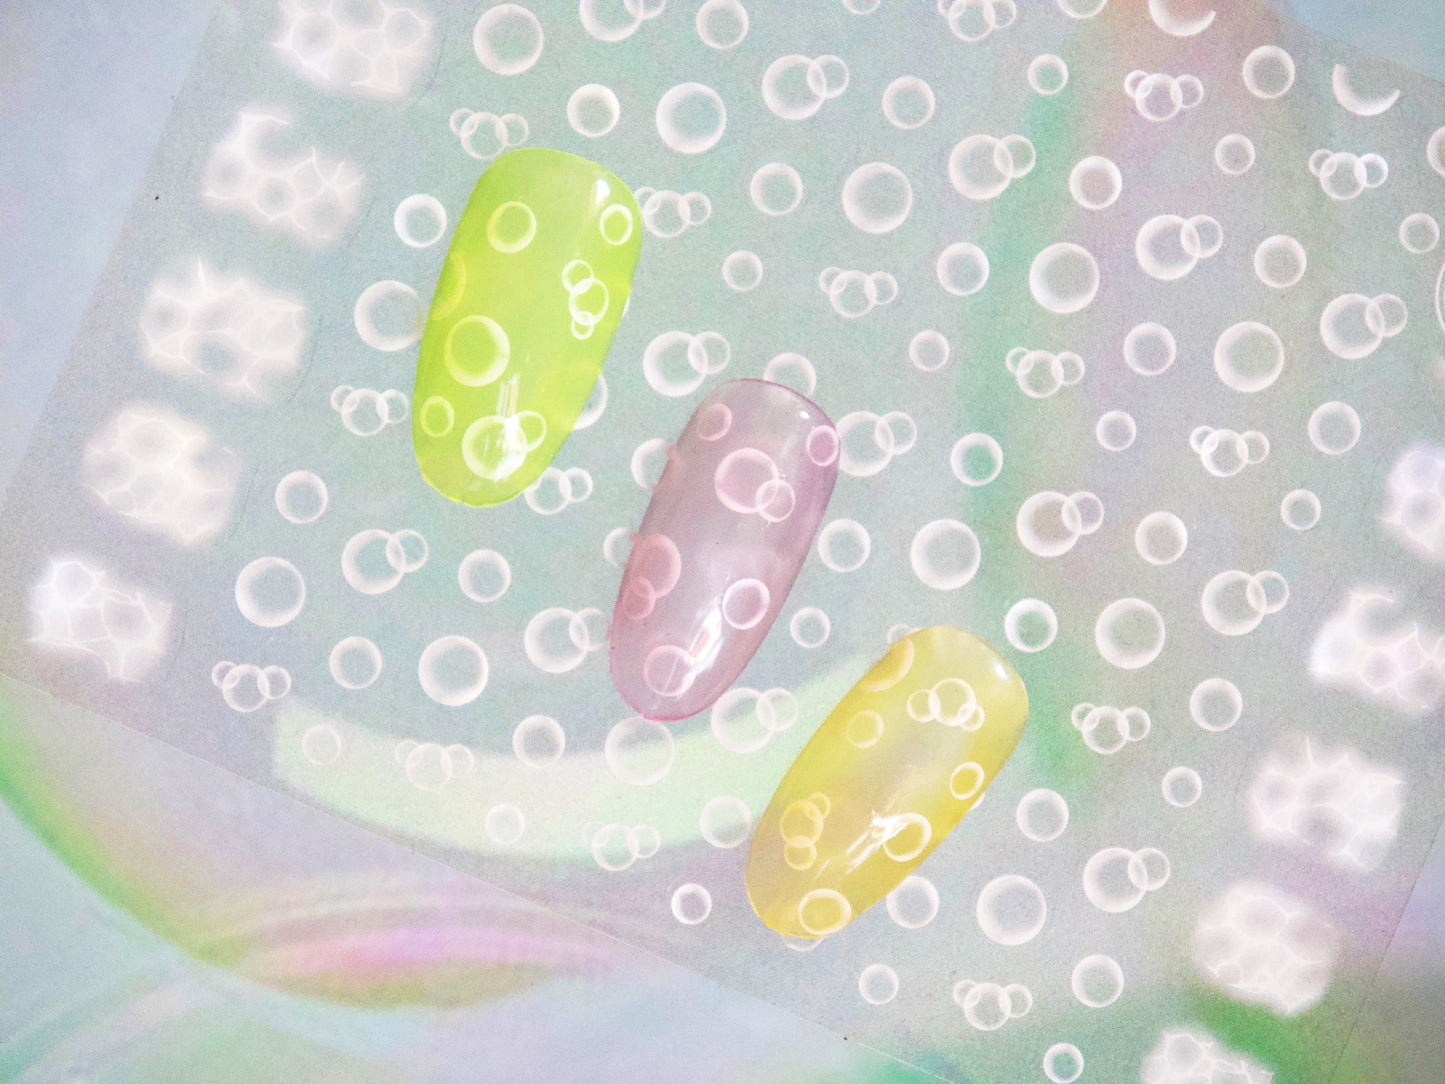 Bubbles nail sticker